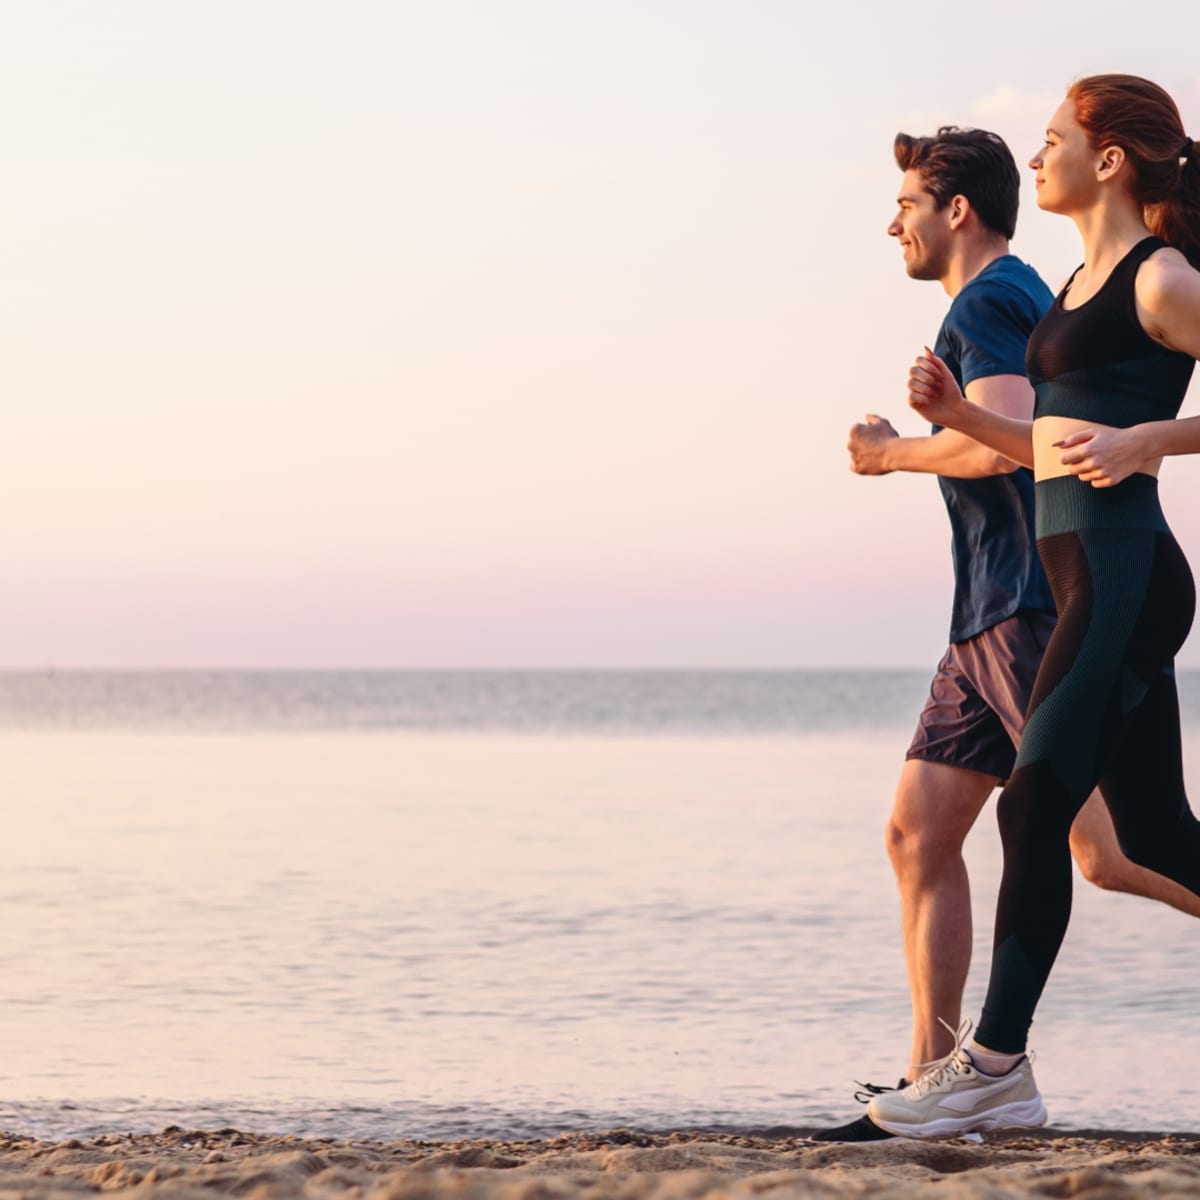 Benefits Of Jogging – 20 Effective Tips To Jog For Better Health